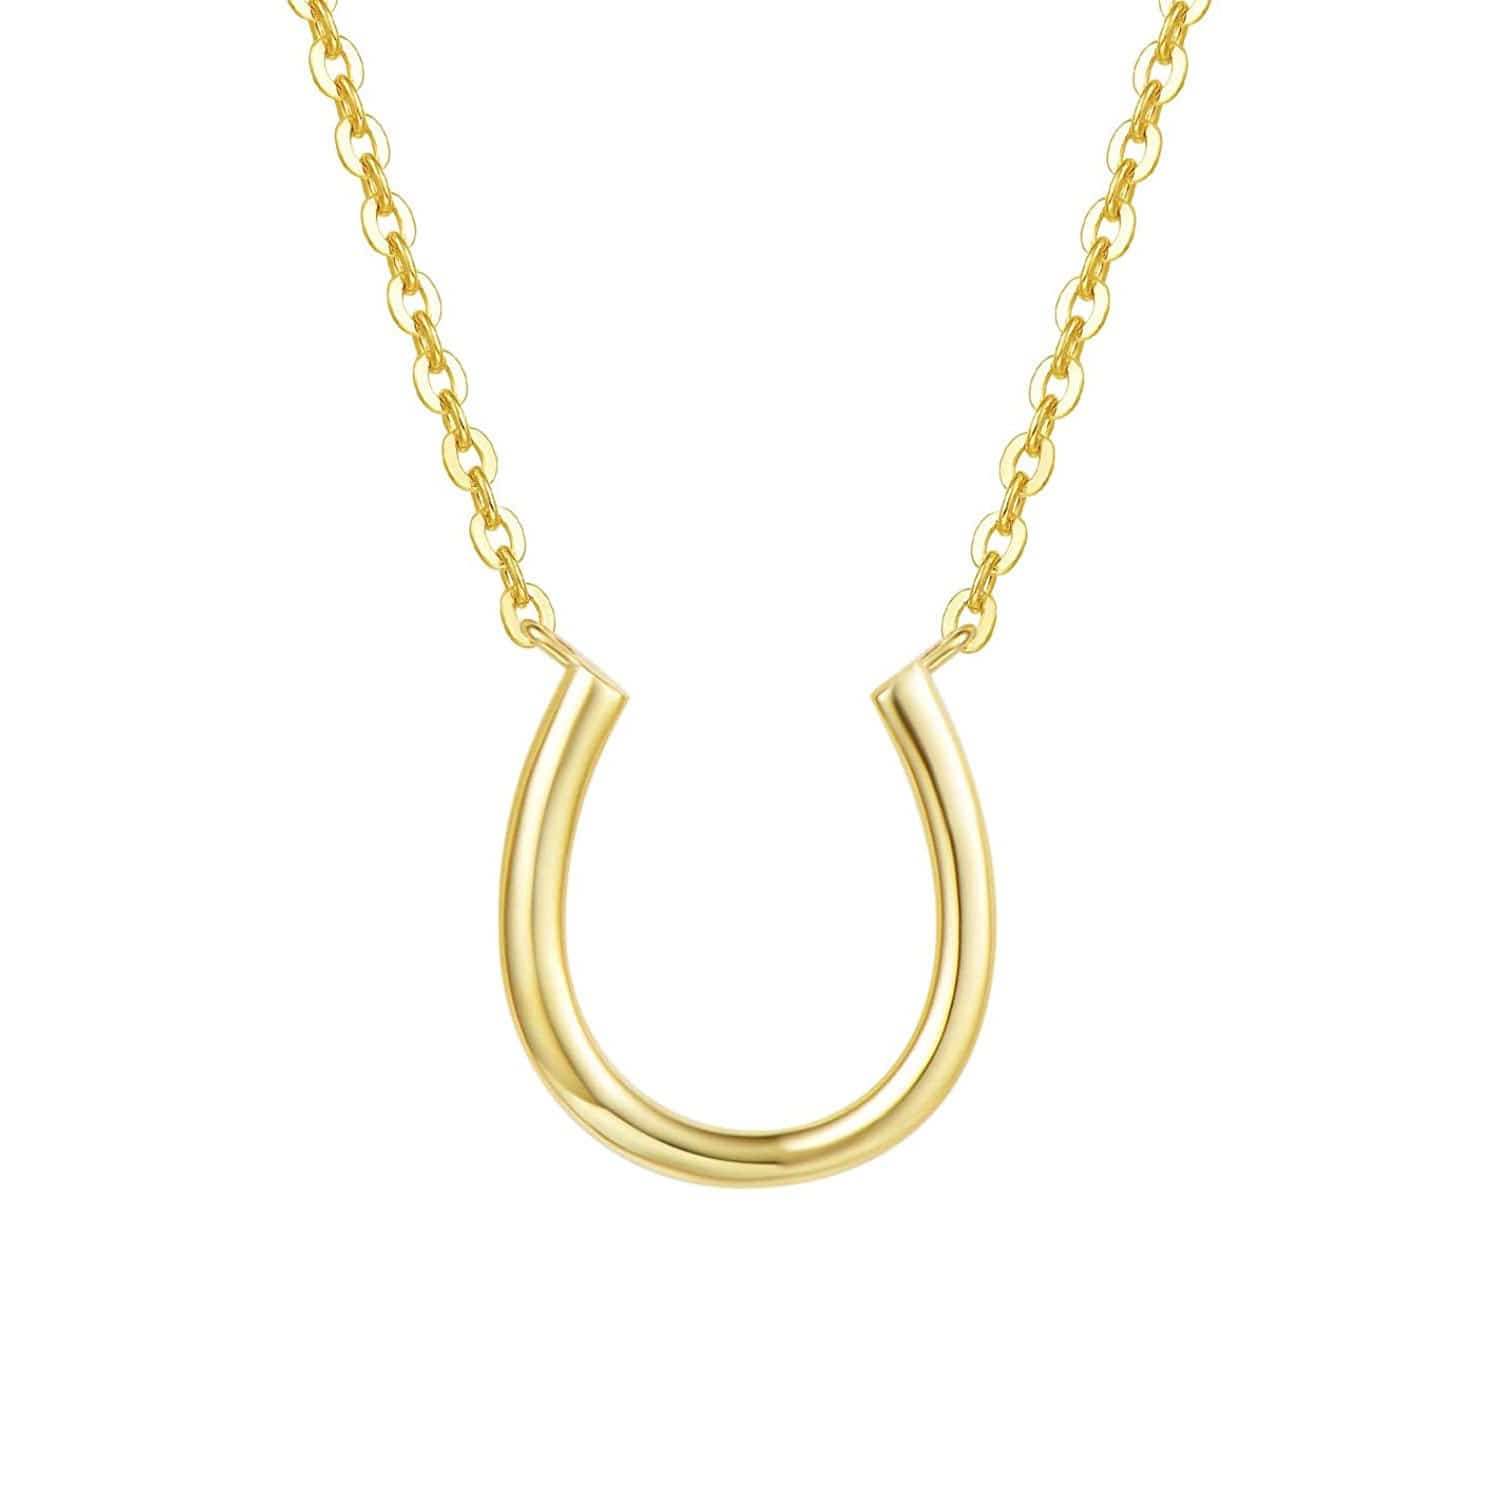 FANCIME Horseshoe Necklace14K Solid Yellow Gold Necklace